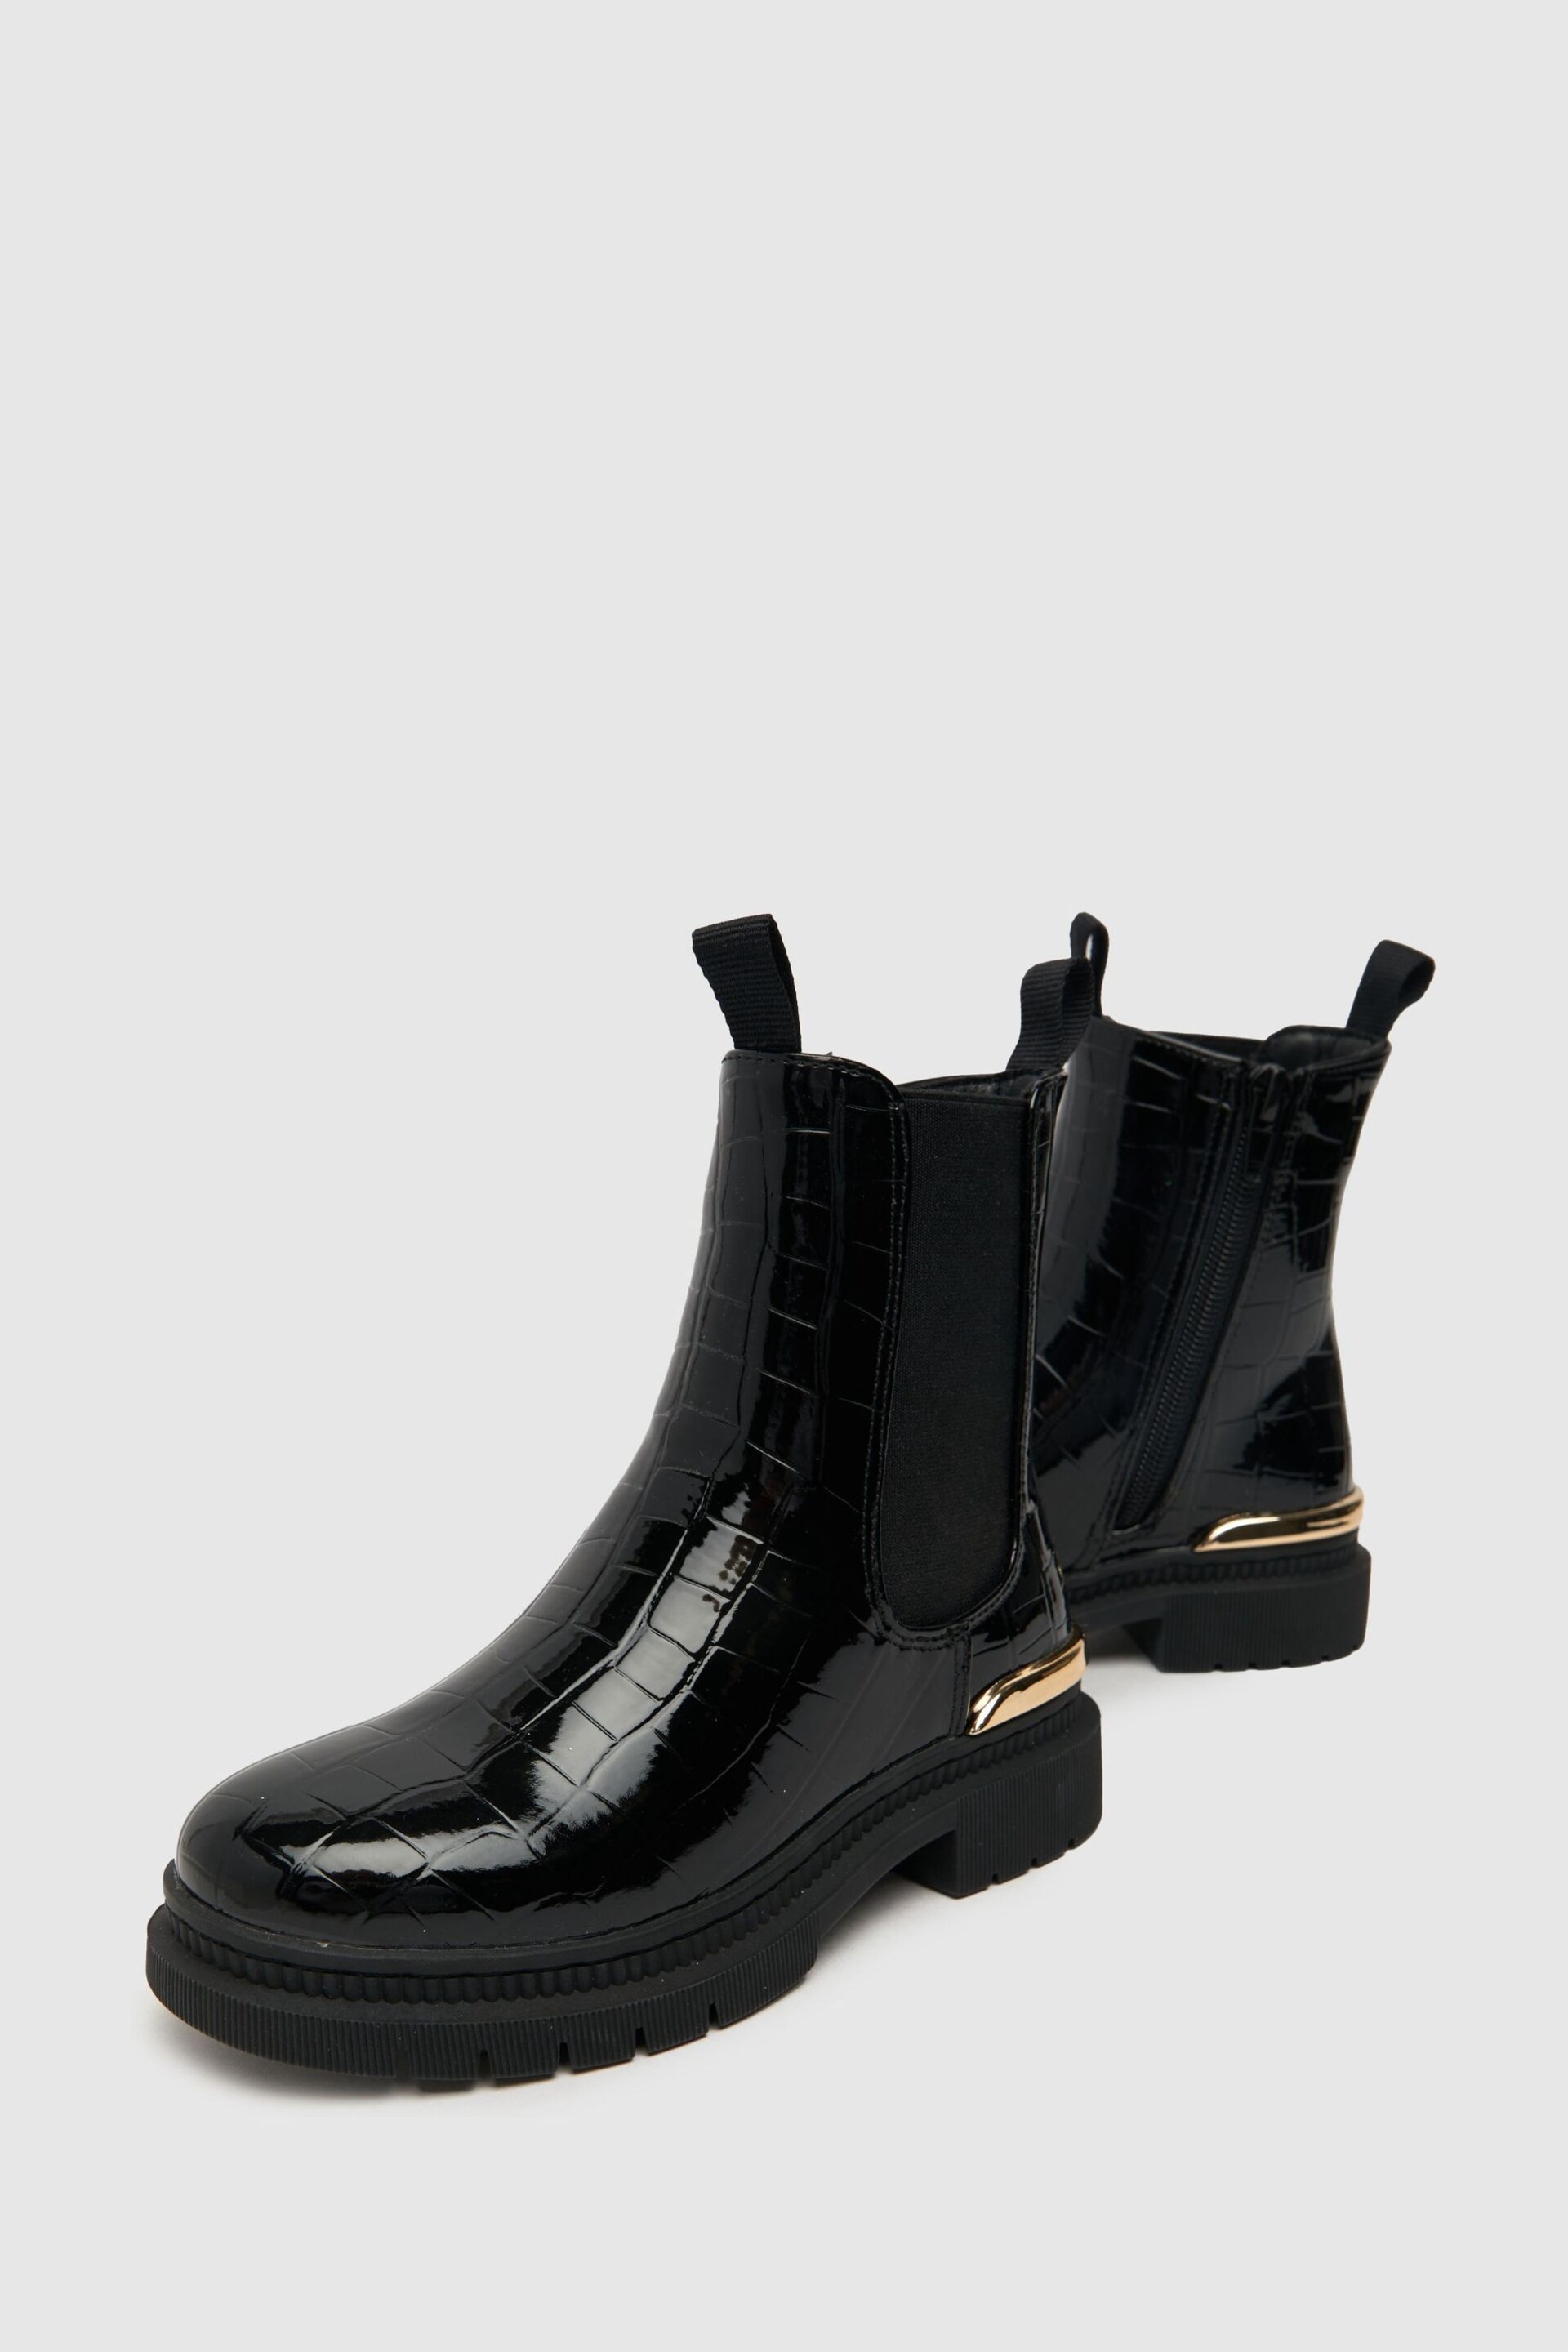 Schuh Calm Black Croc Boots - Image 3 of 4